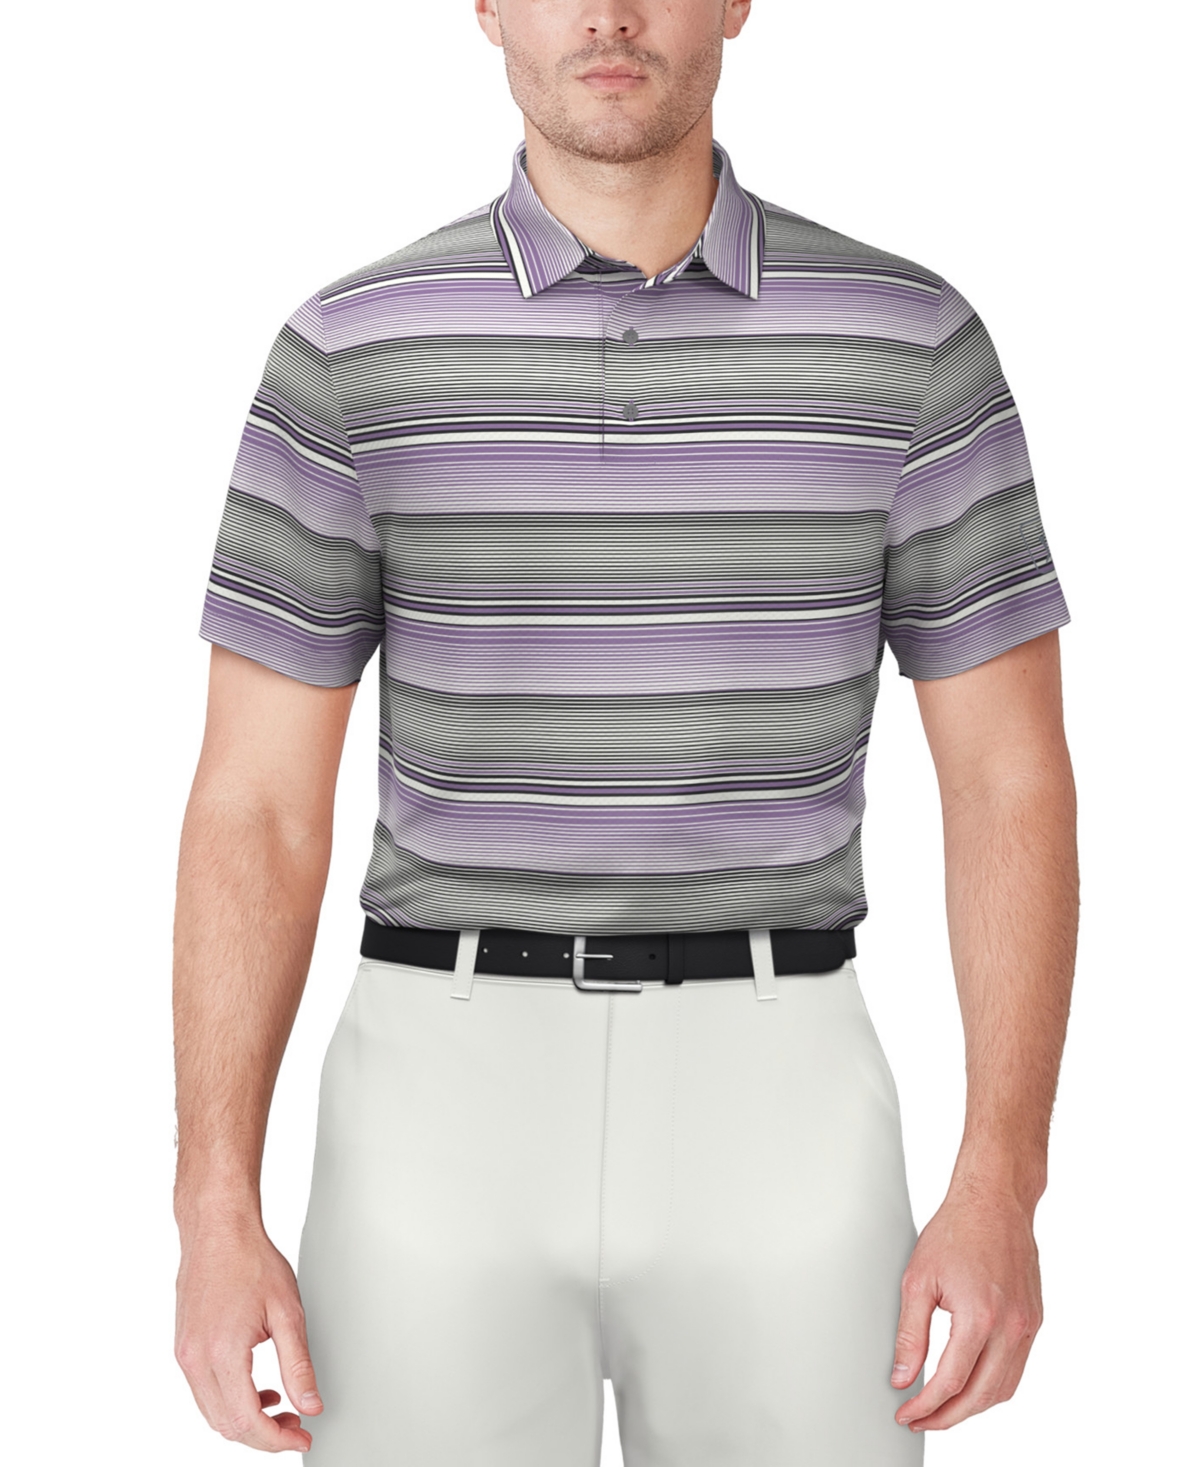 Men's Linear Energy Textured Short Sleeve Performance Golf Polo Shirt - Cyan Blue